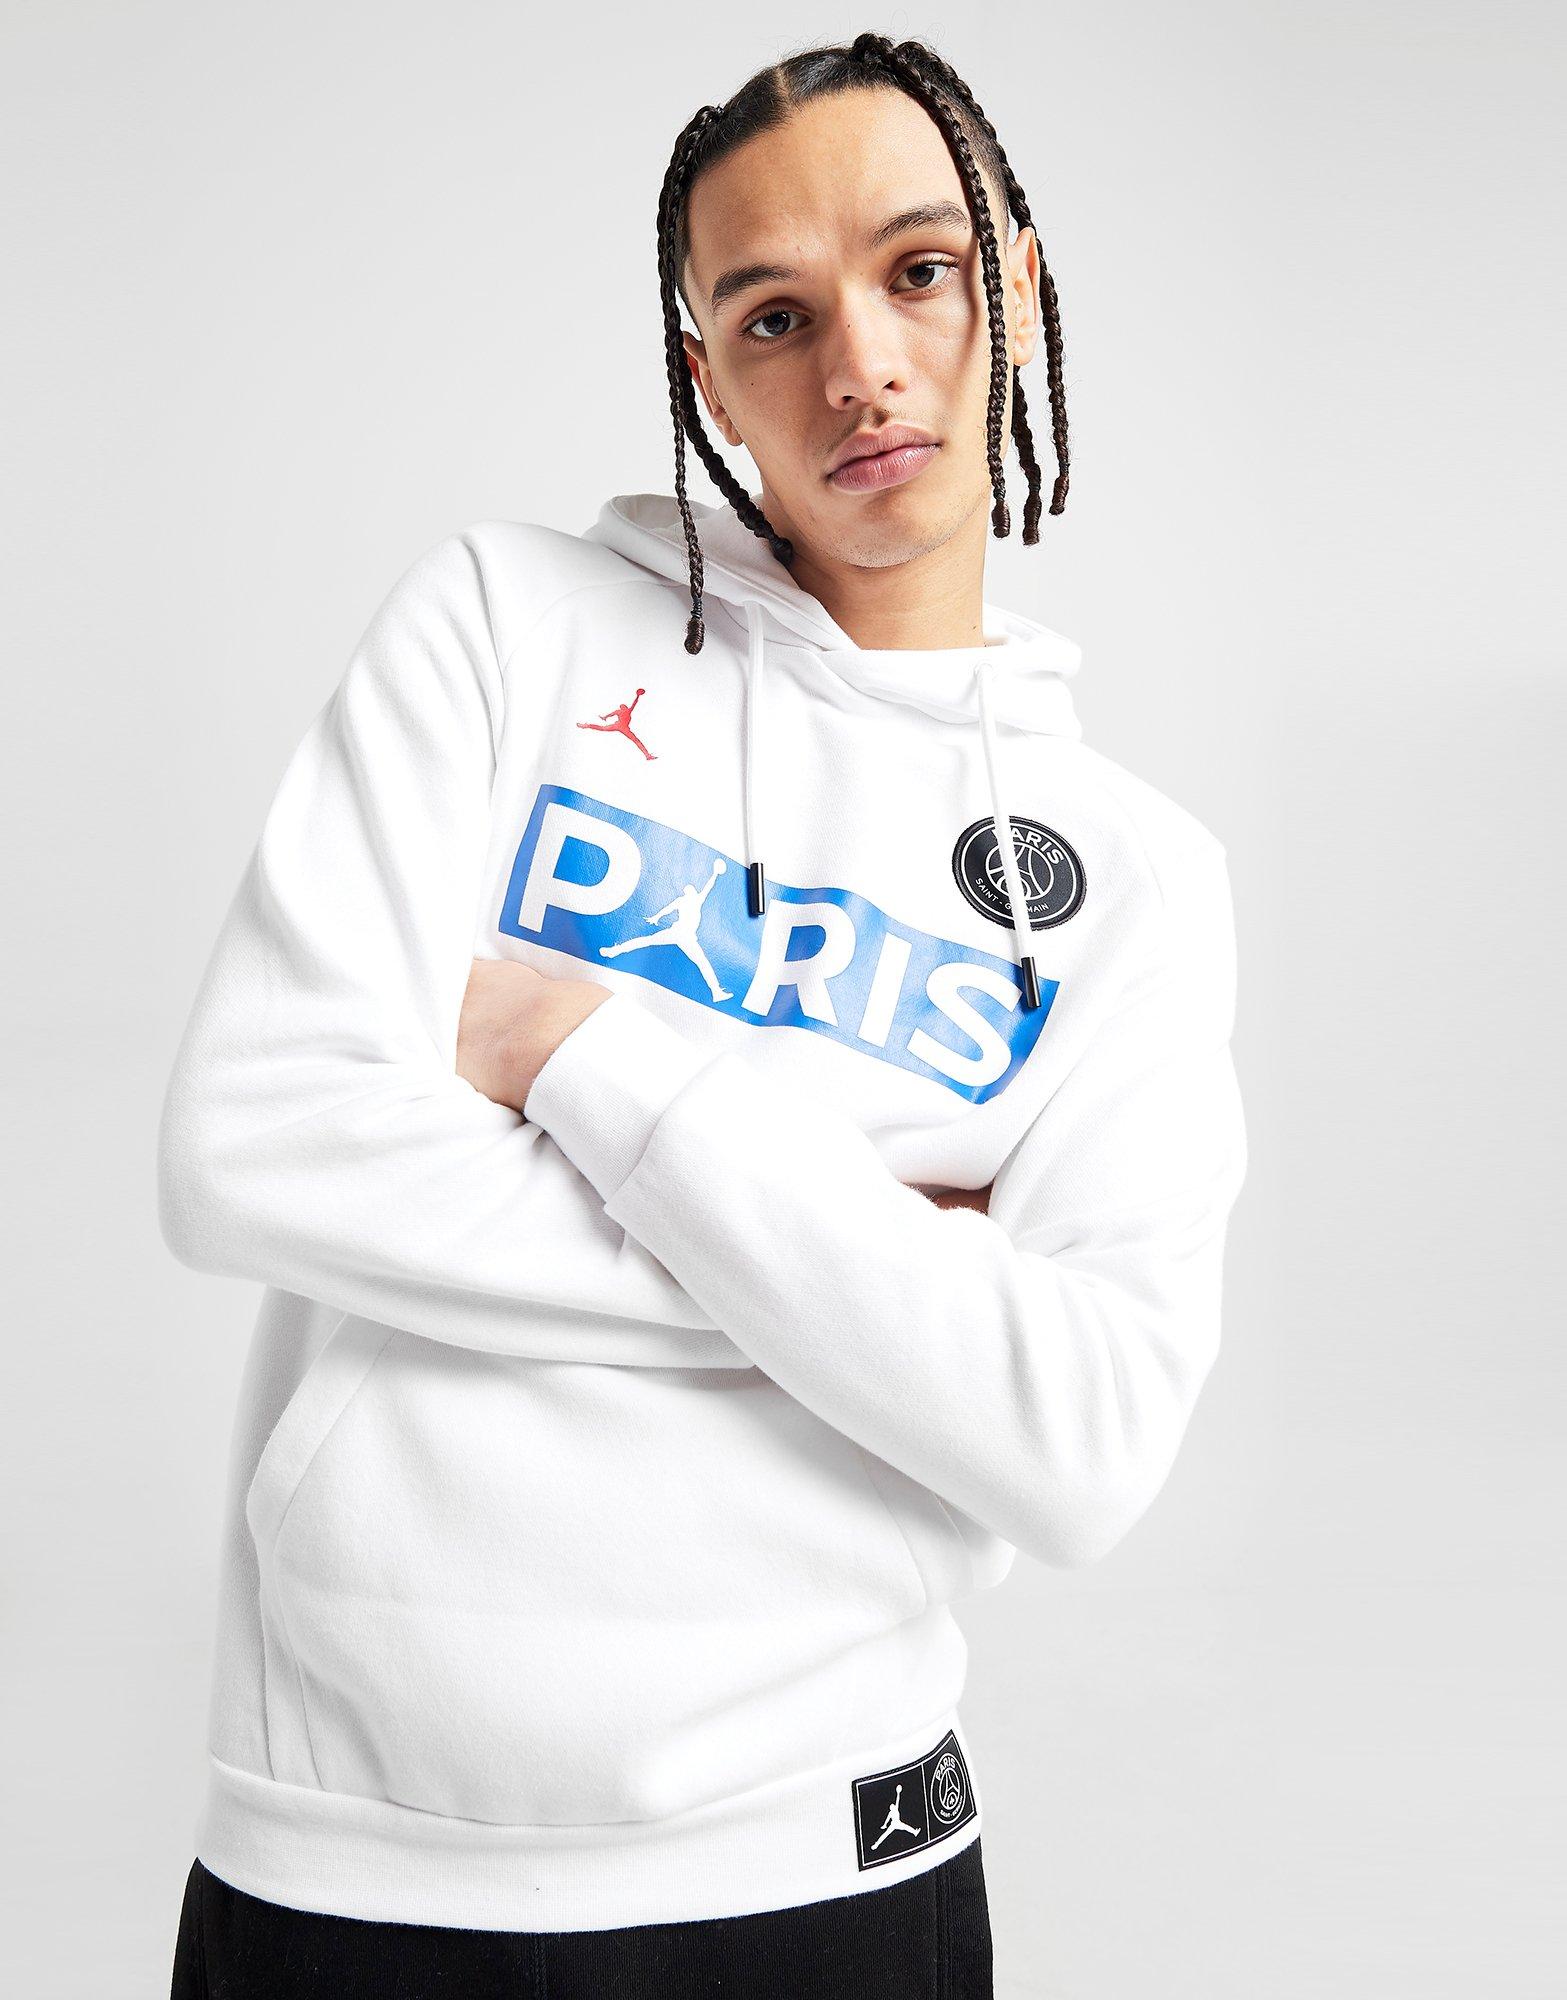 white paris jordan hoodie